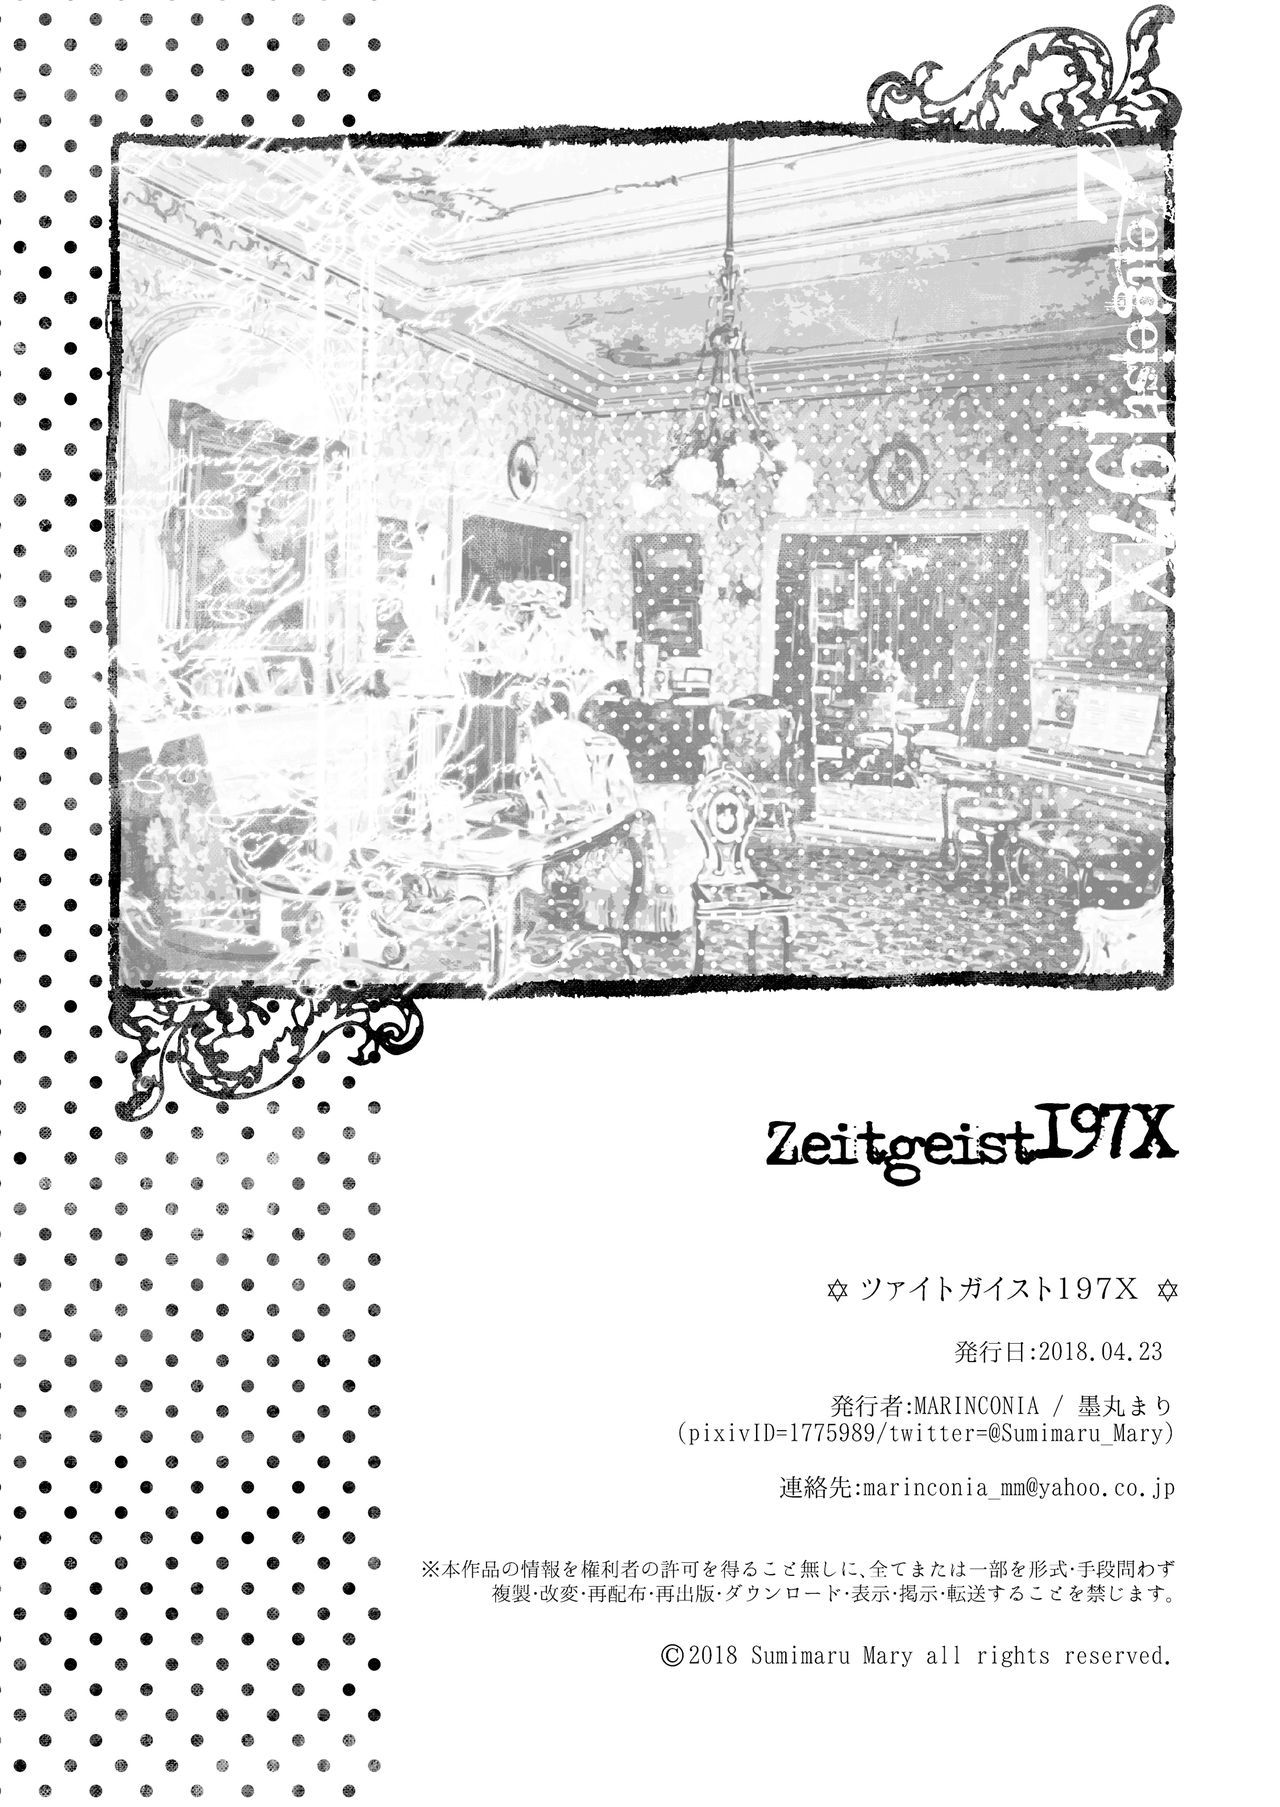 Zeitgeist197X |時間代精神197X